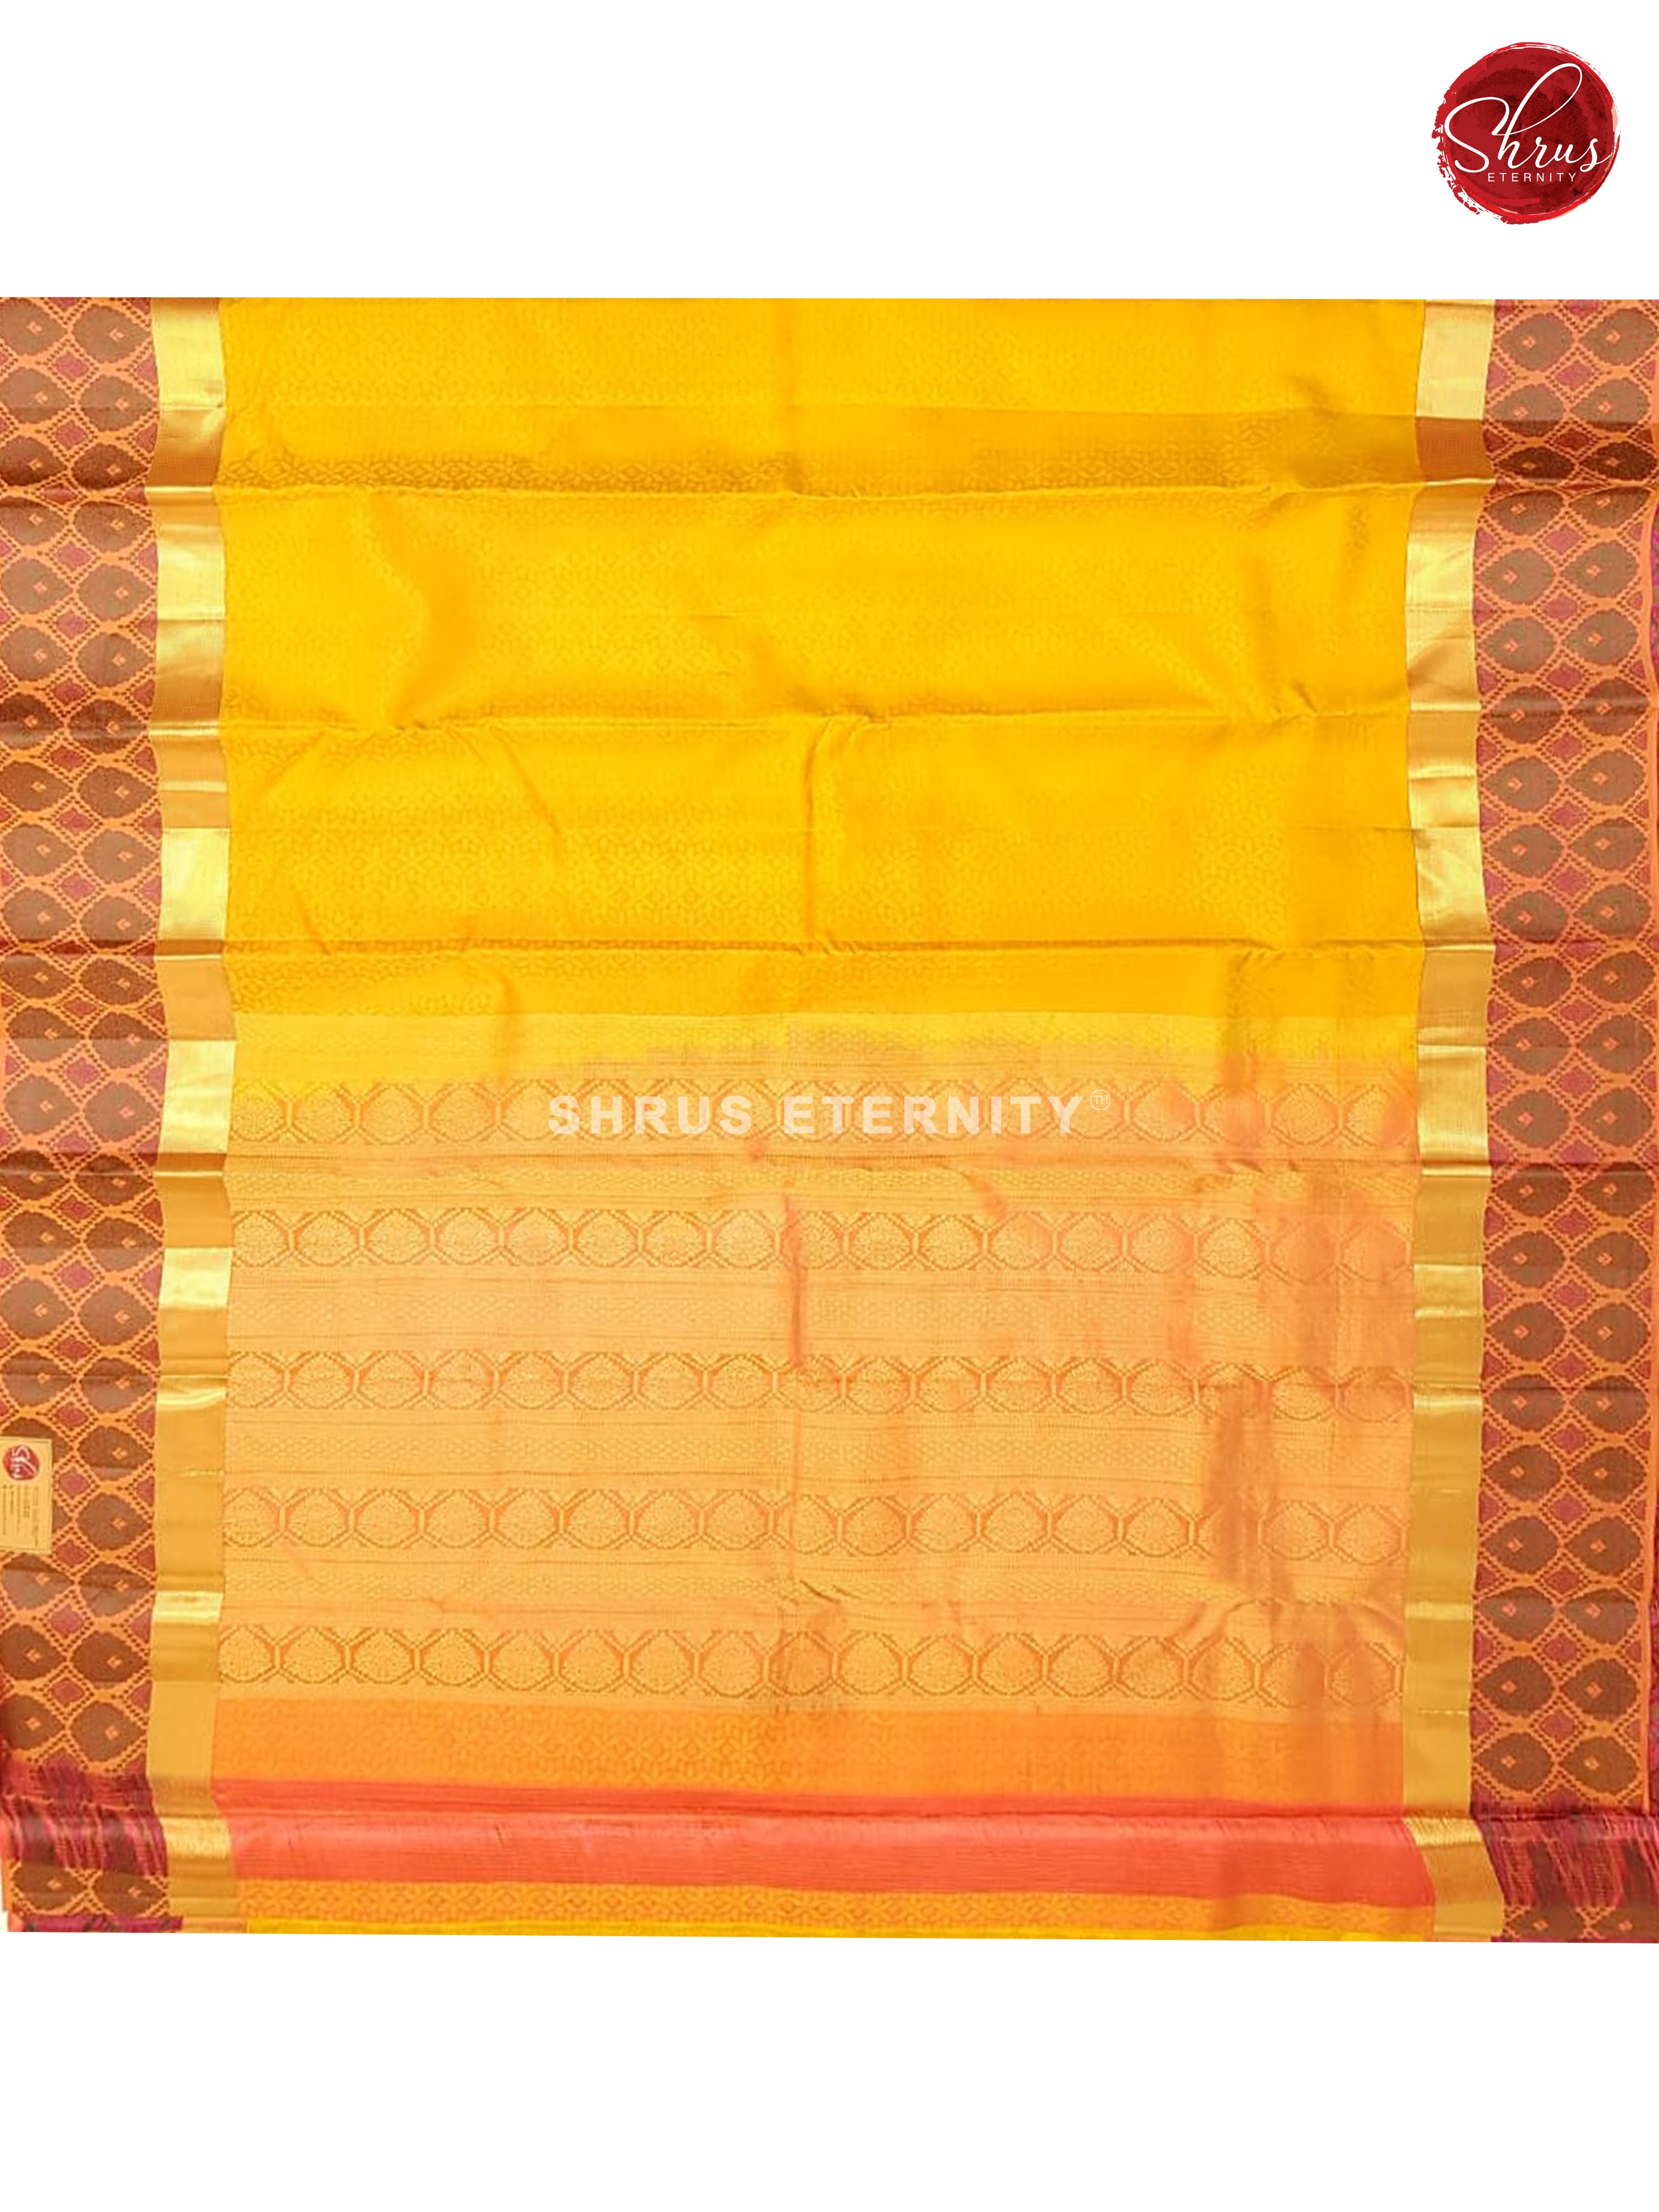 Yellow & Peachish Pink - Kanchipuram Silk - Shop on ShrusEternity.com